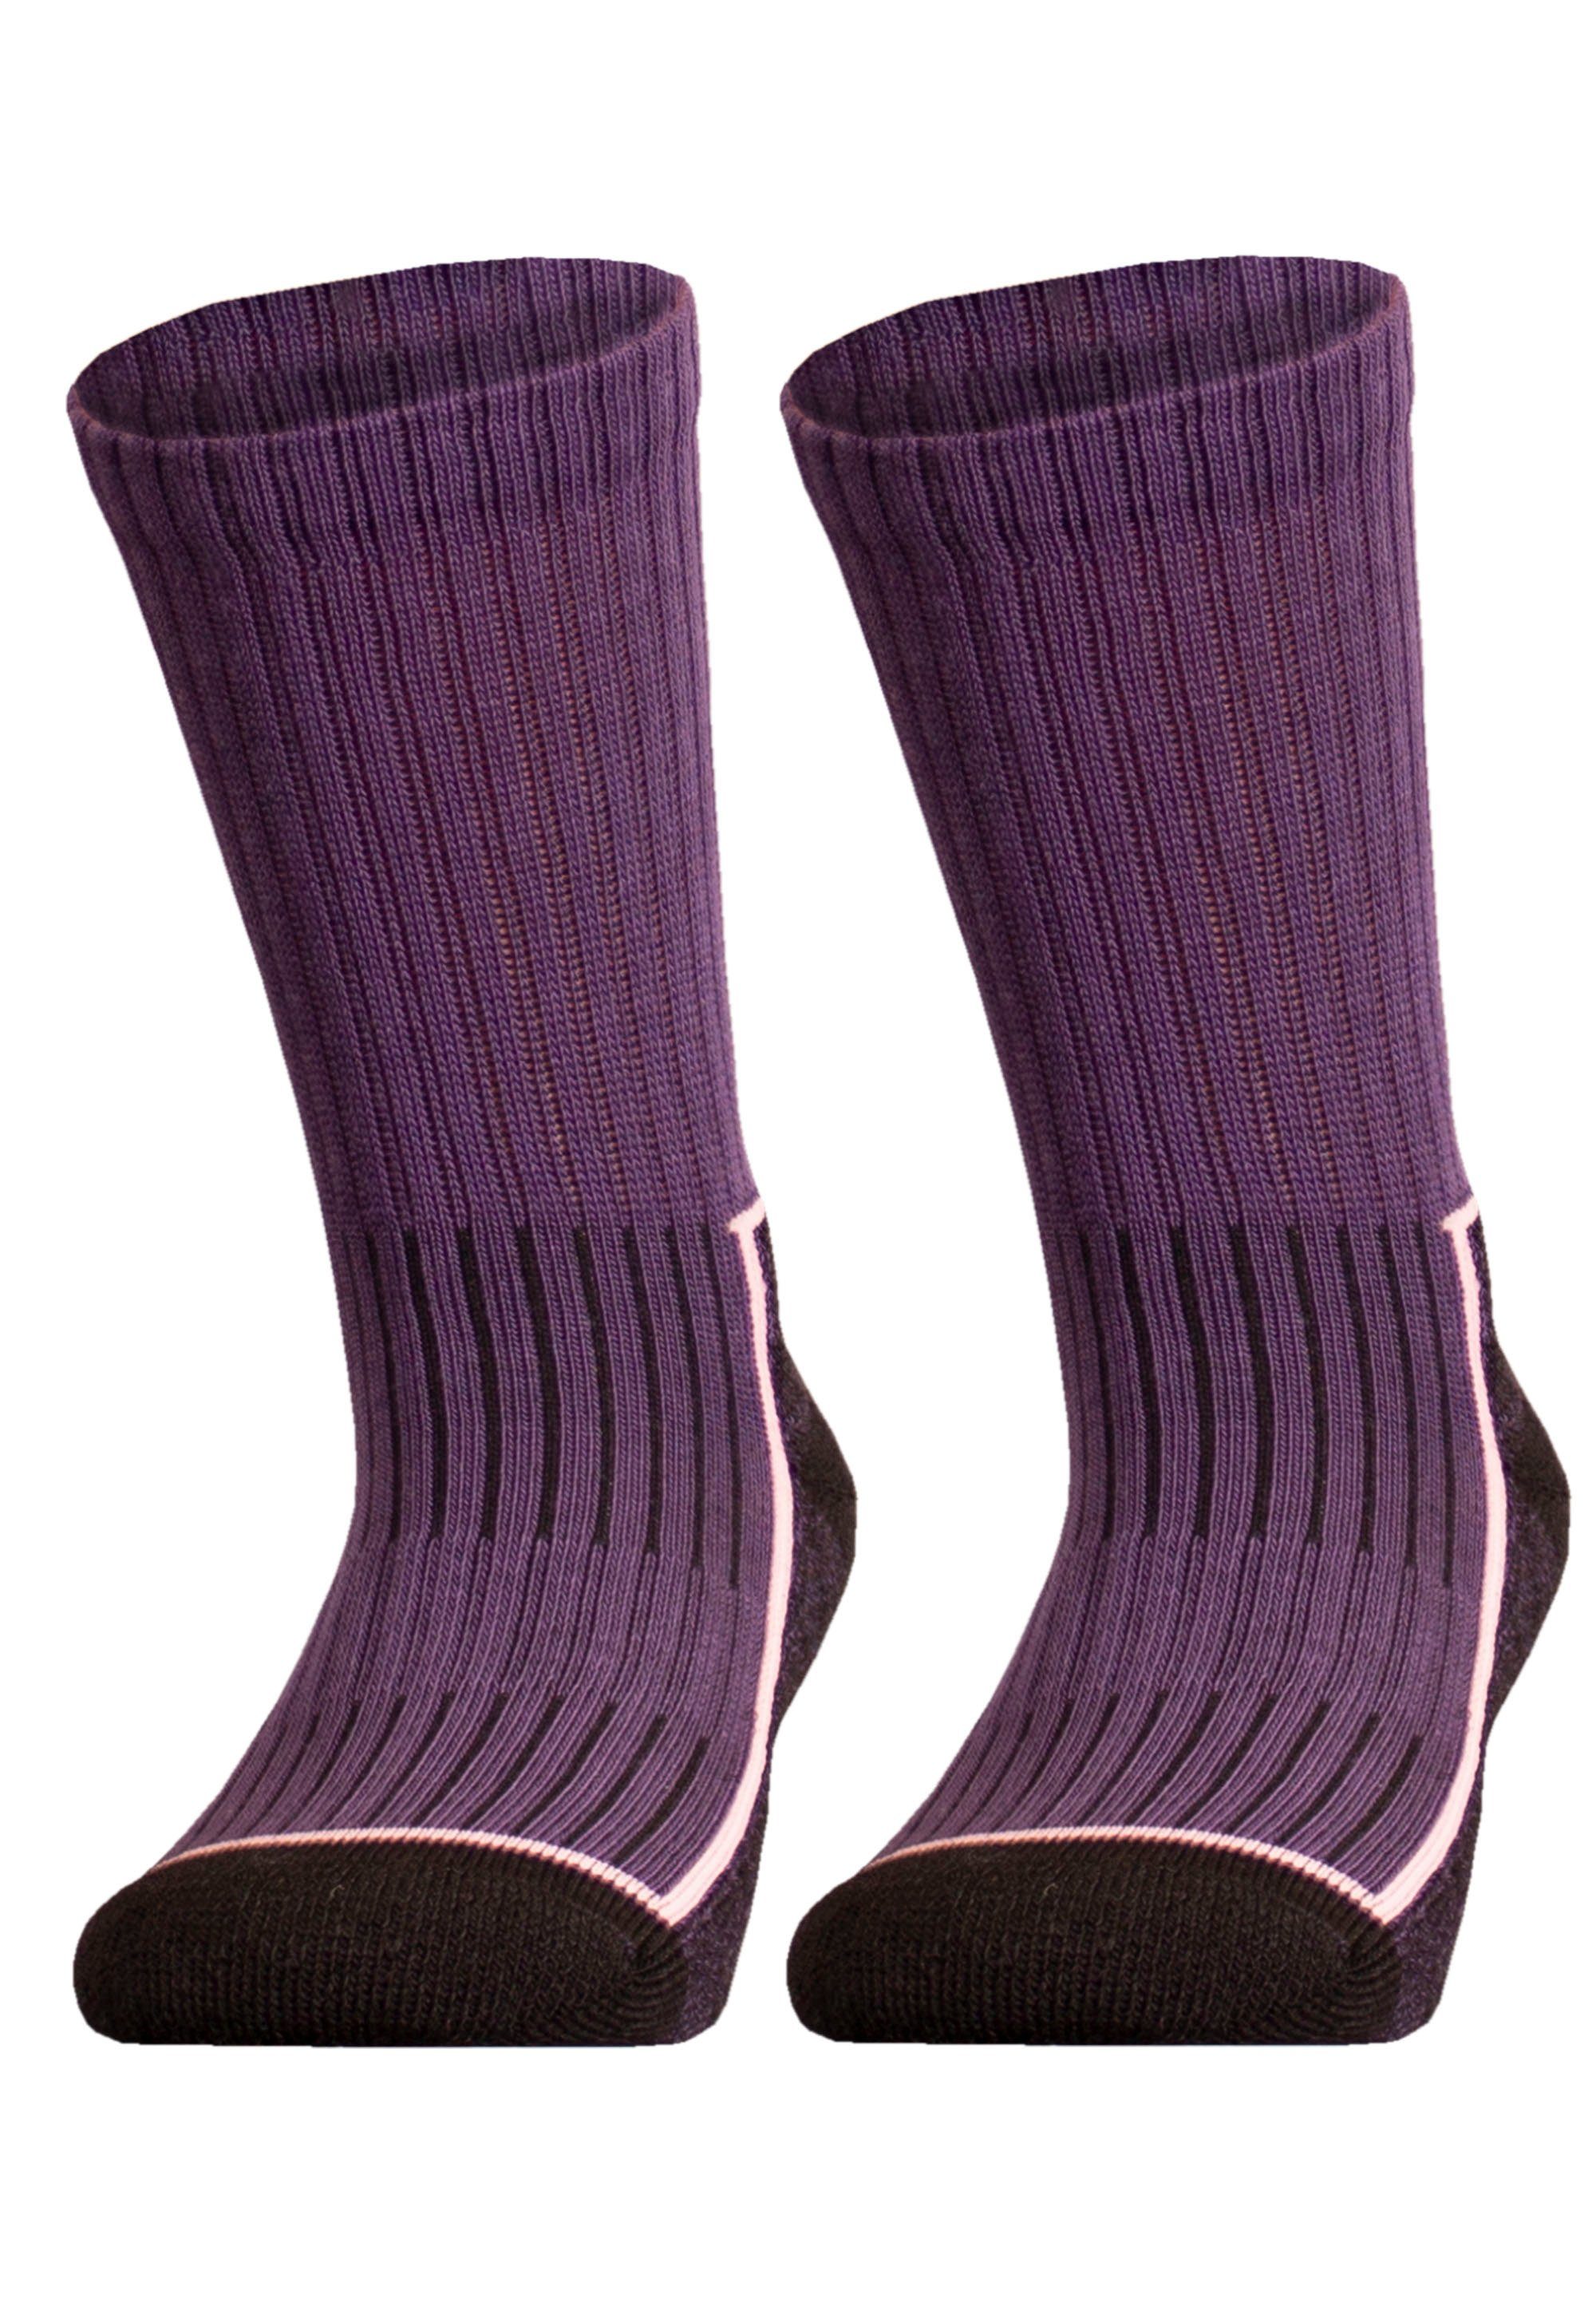 UphillSport Socken SAANA JR 2er Pack (2-Paar) mit Flextech-Struktur lila